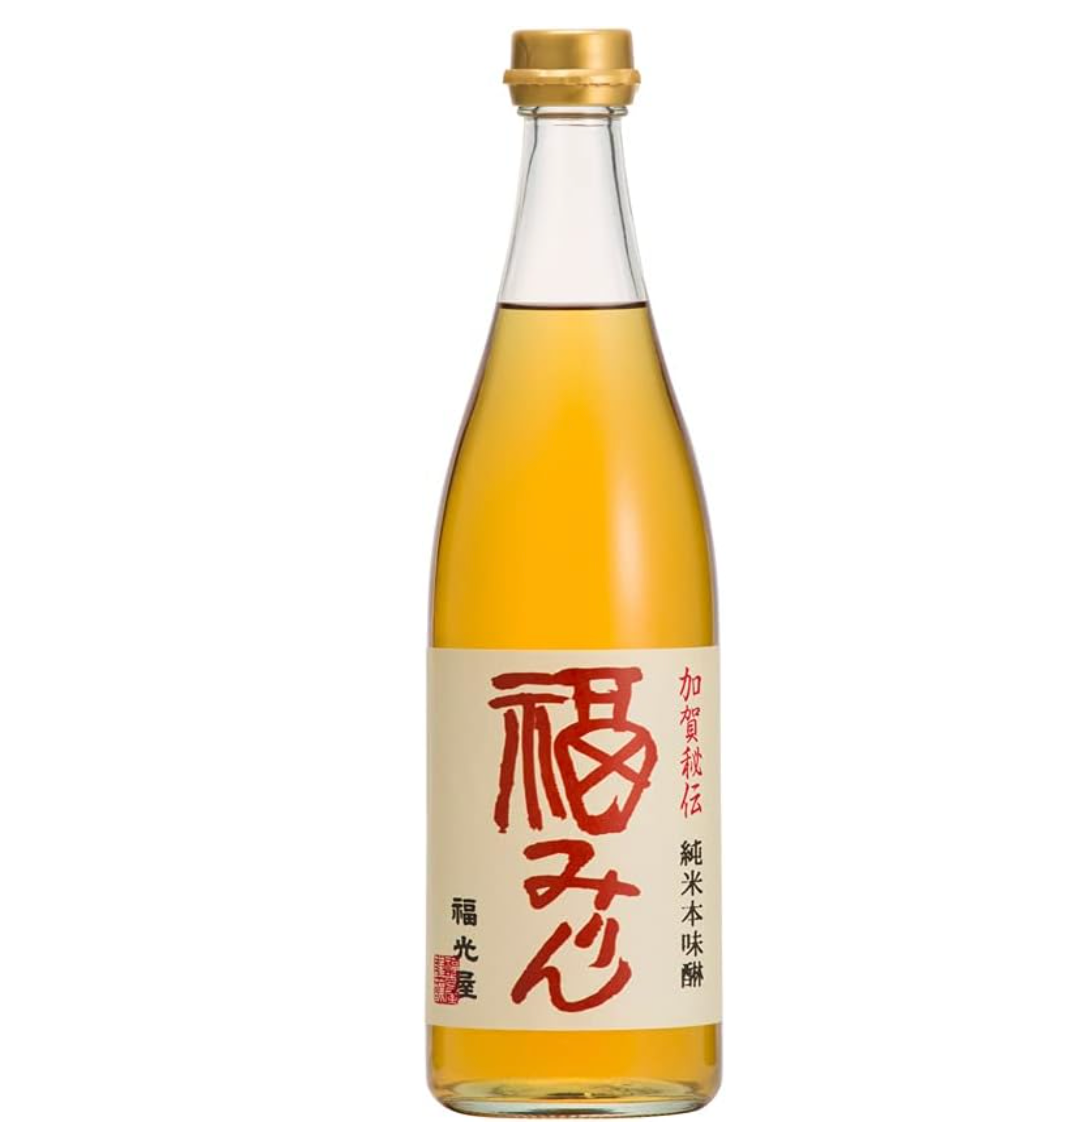 Fukumitsuya Junmai Hon Mirin 3 Year Aged Sweet Rice Wine 720ml